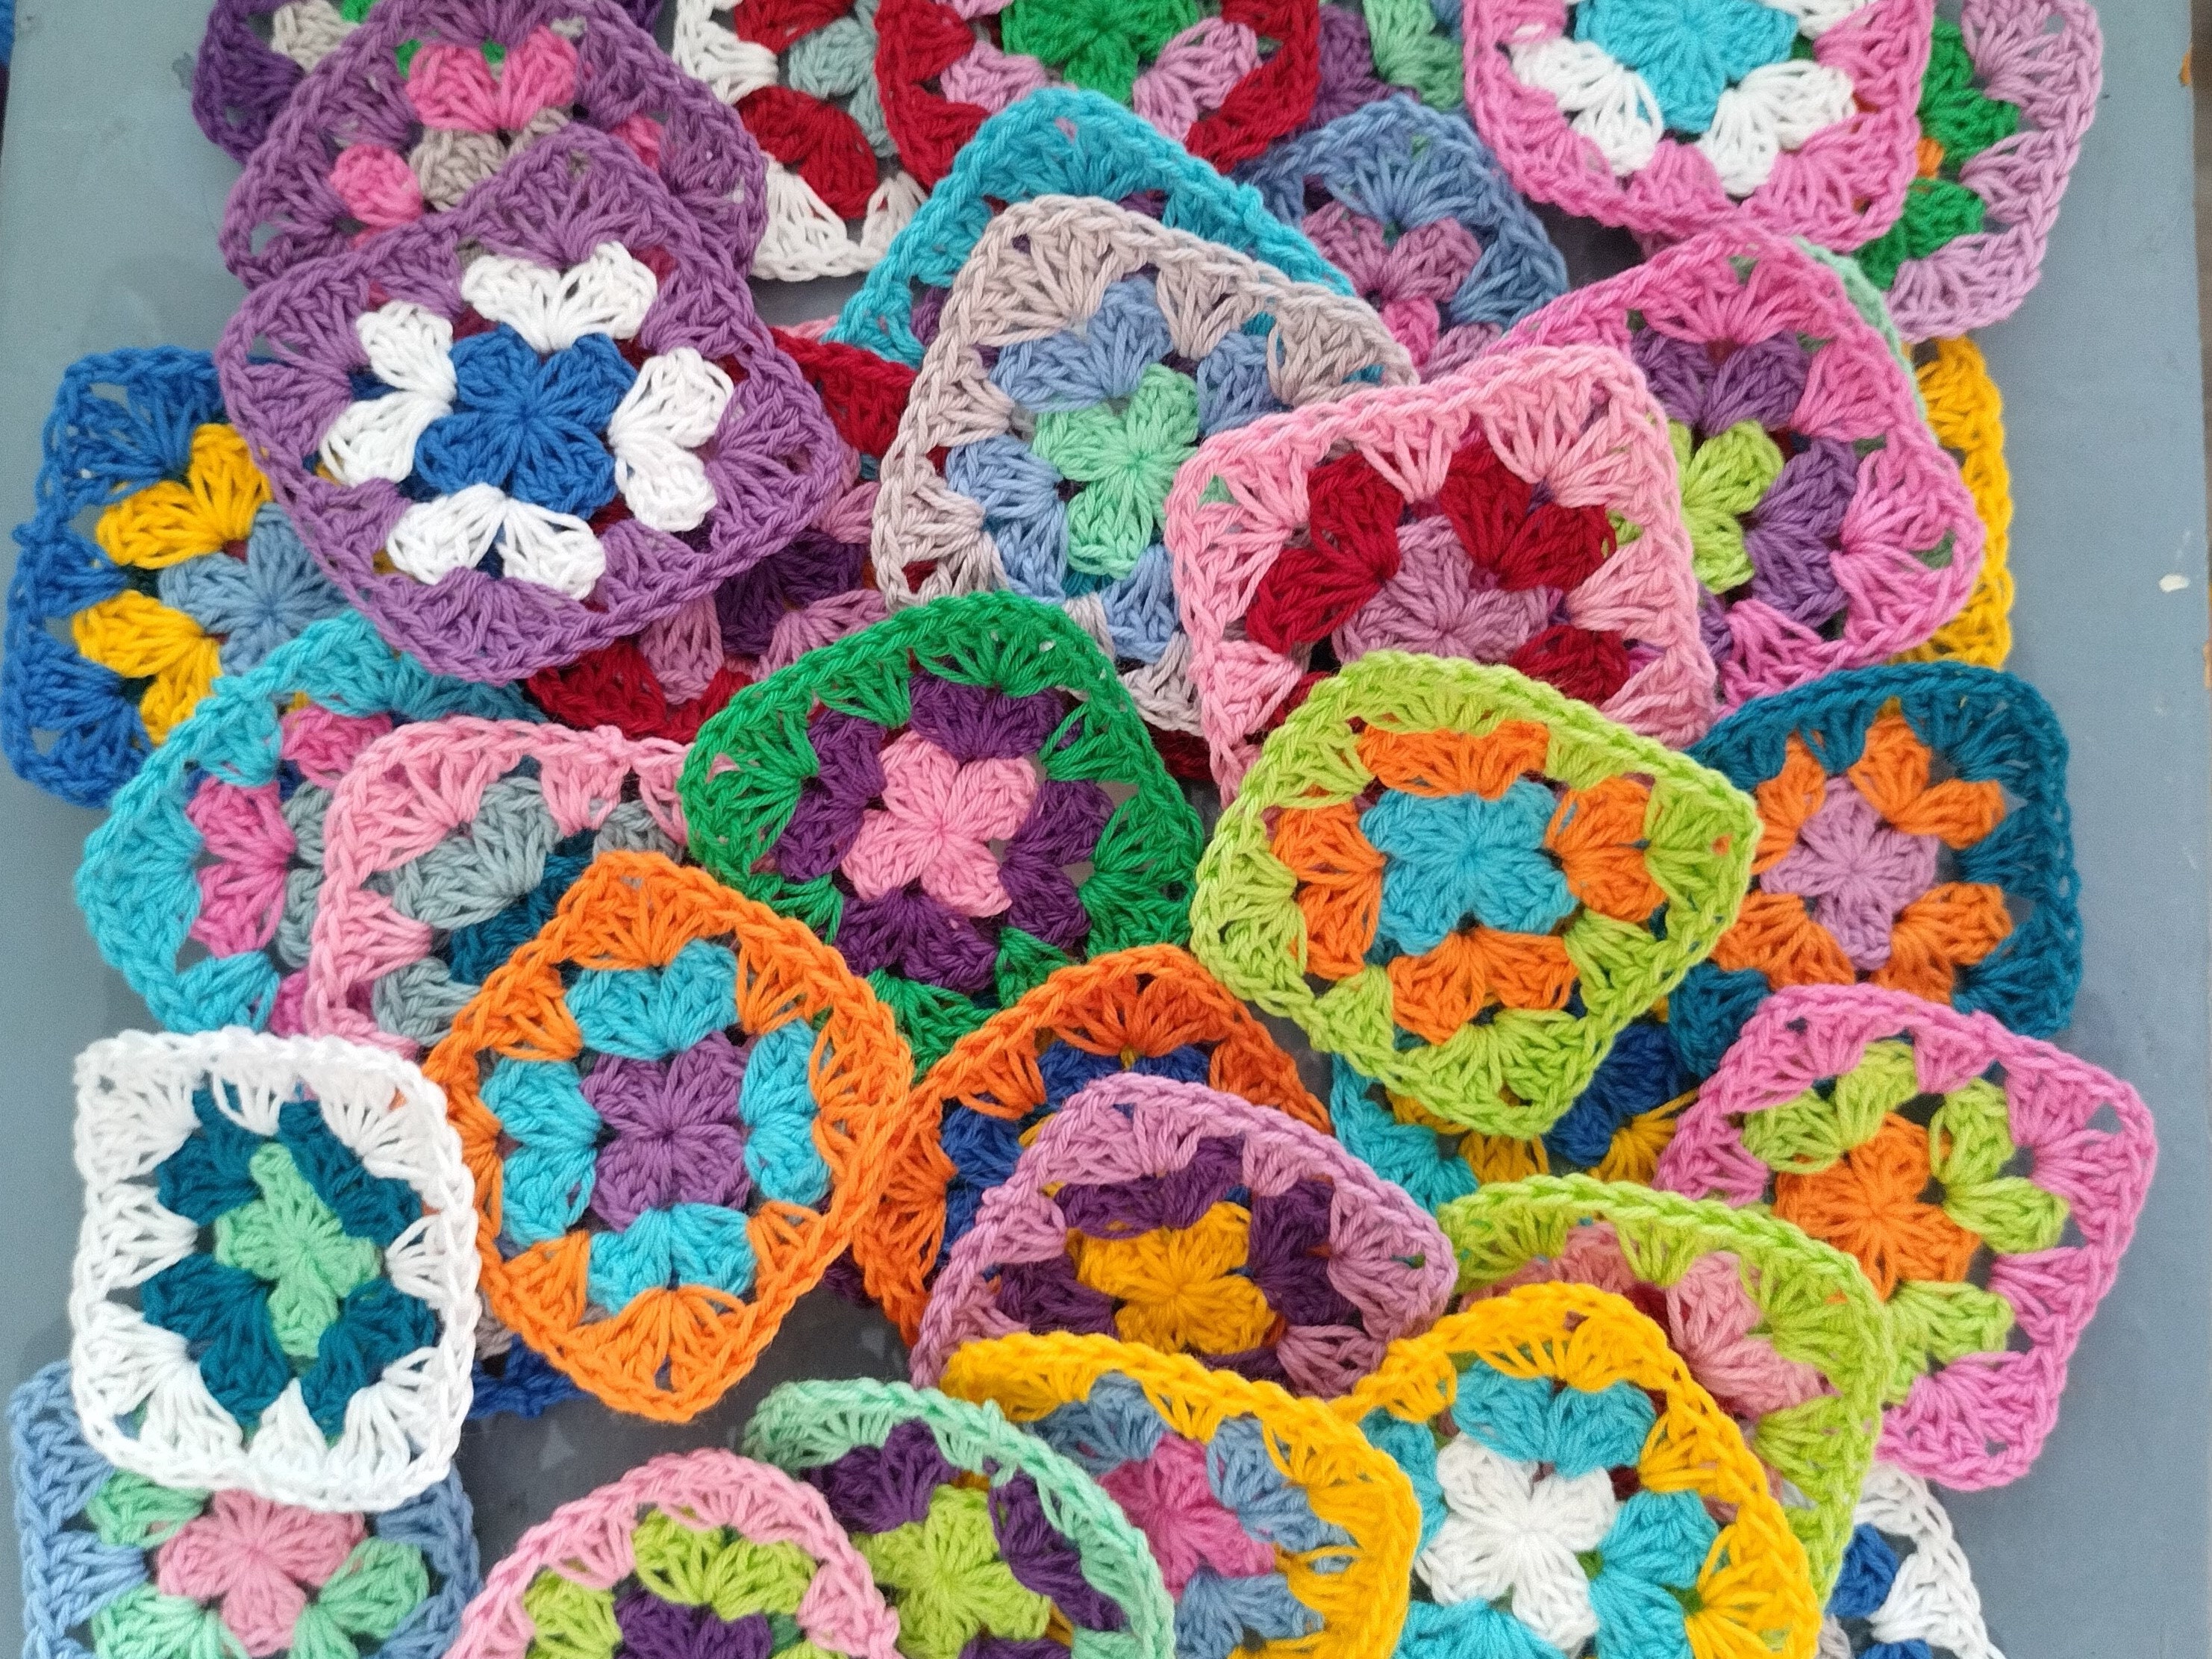 20 Crochet Granny Squares, Granny Squares, Crochet Motif, Granny Squares  Motif, Handmade Crochet, Colorful Granny Squares, 4inch 